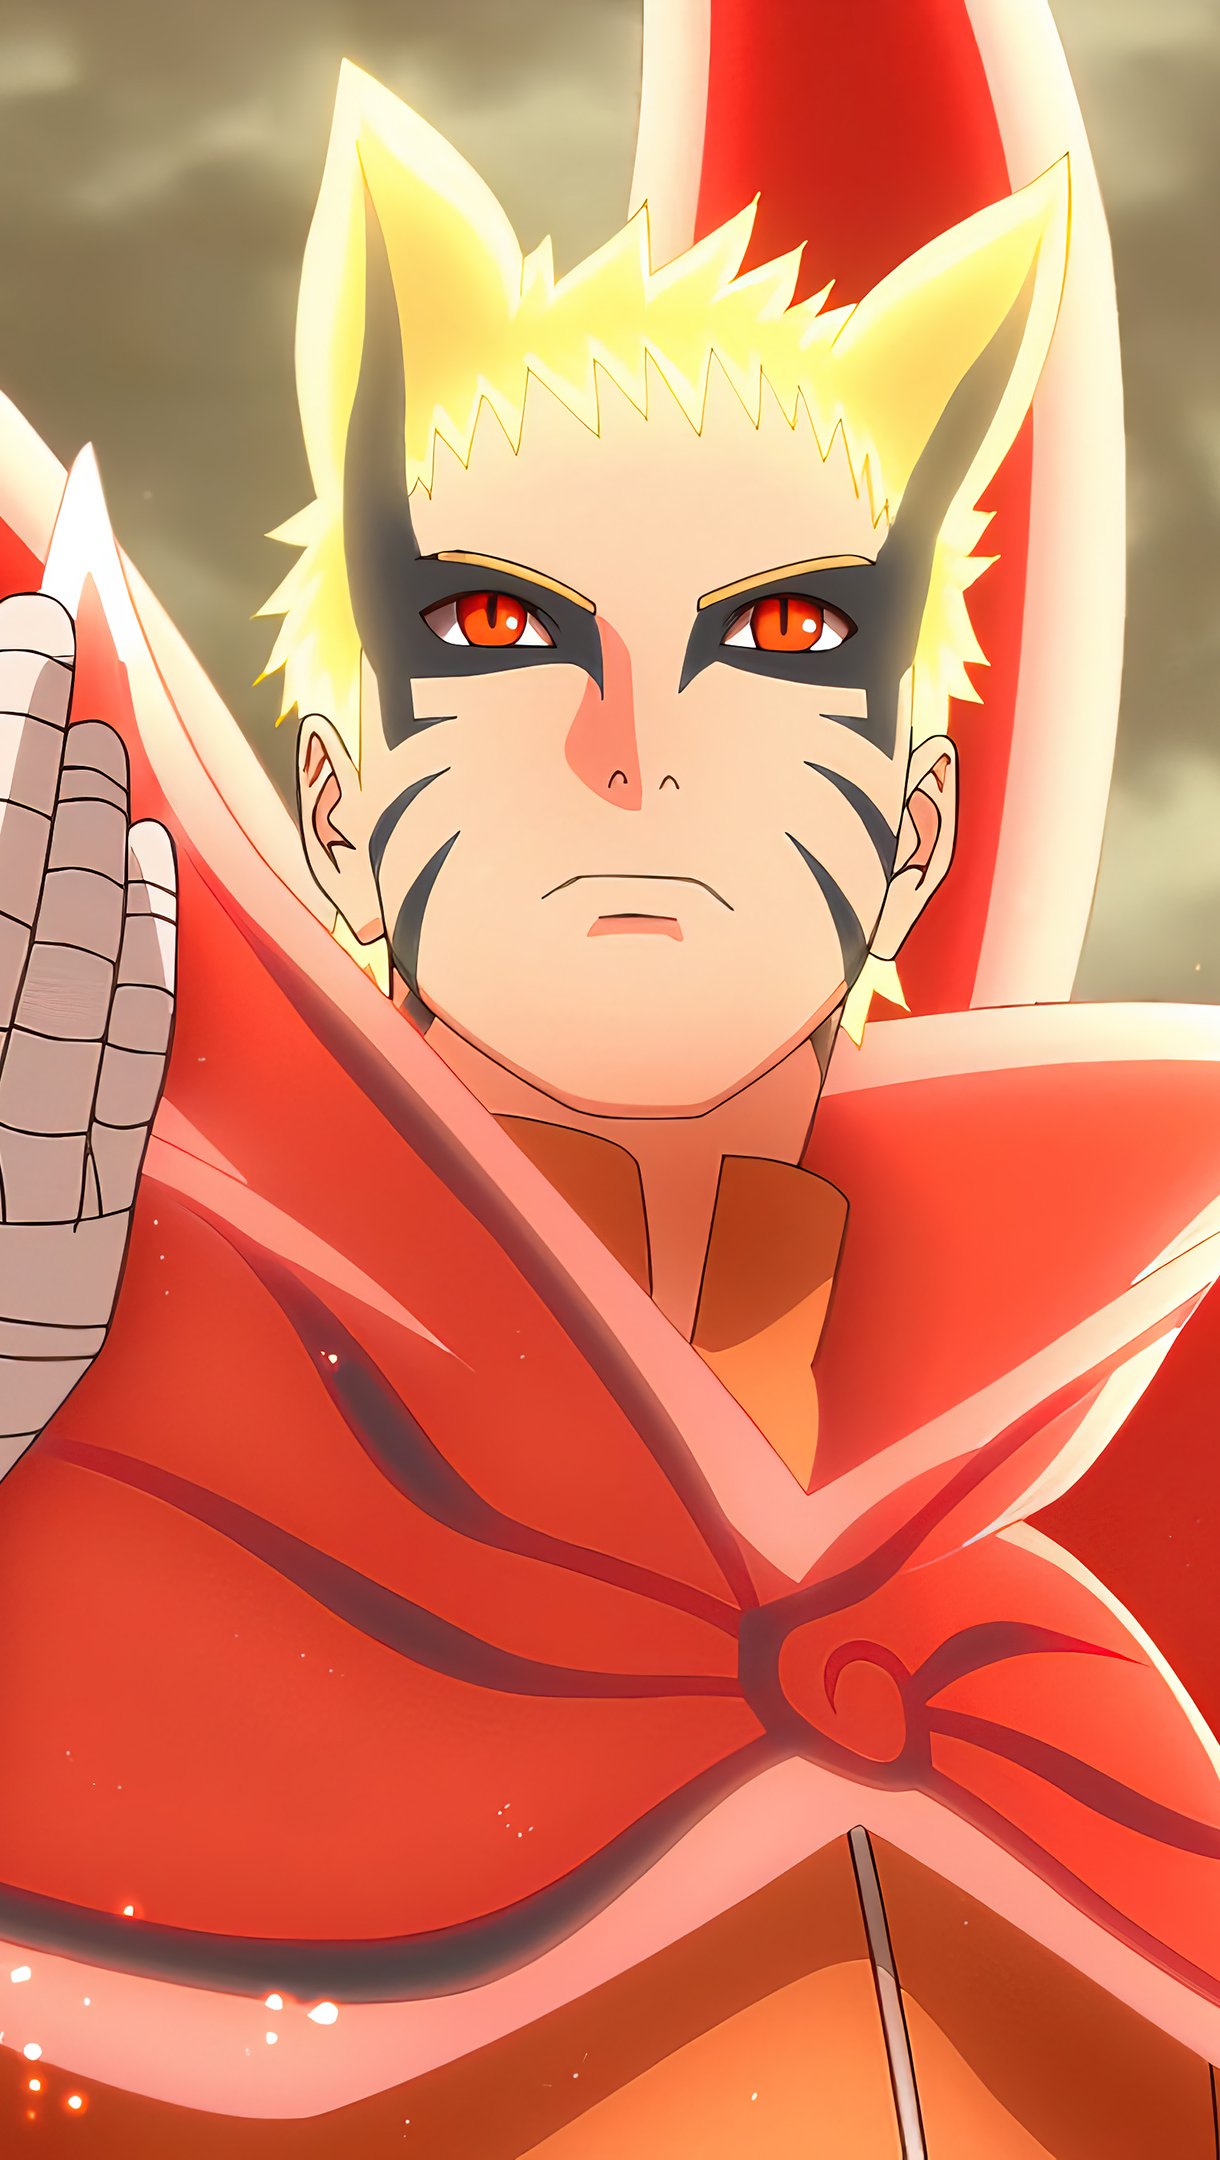 Naruto Uzumaki hand up Baryon Mode Anime Wallpaper 4k Ultra HD ID8737